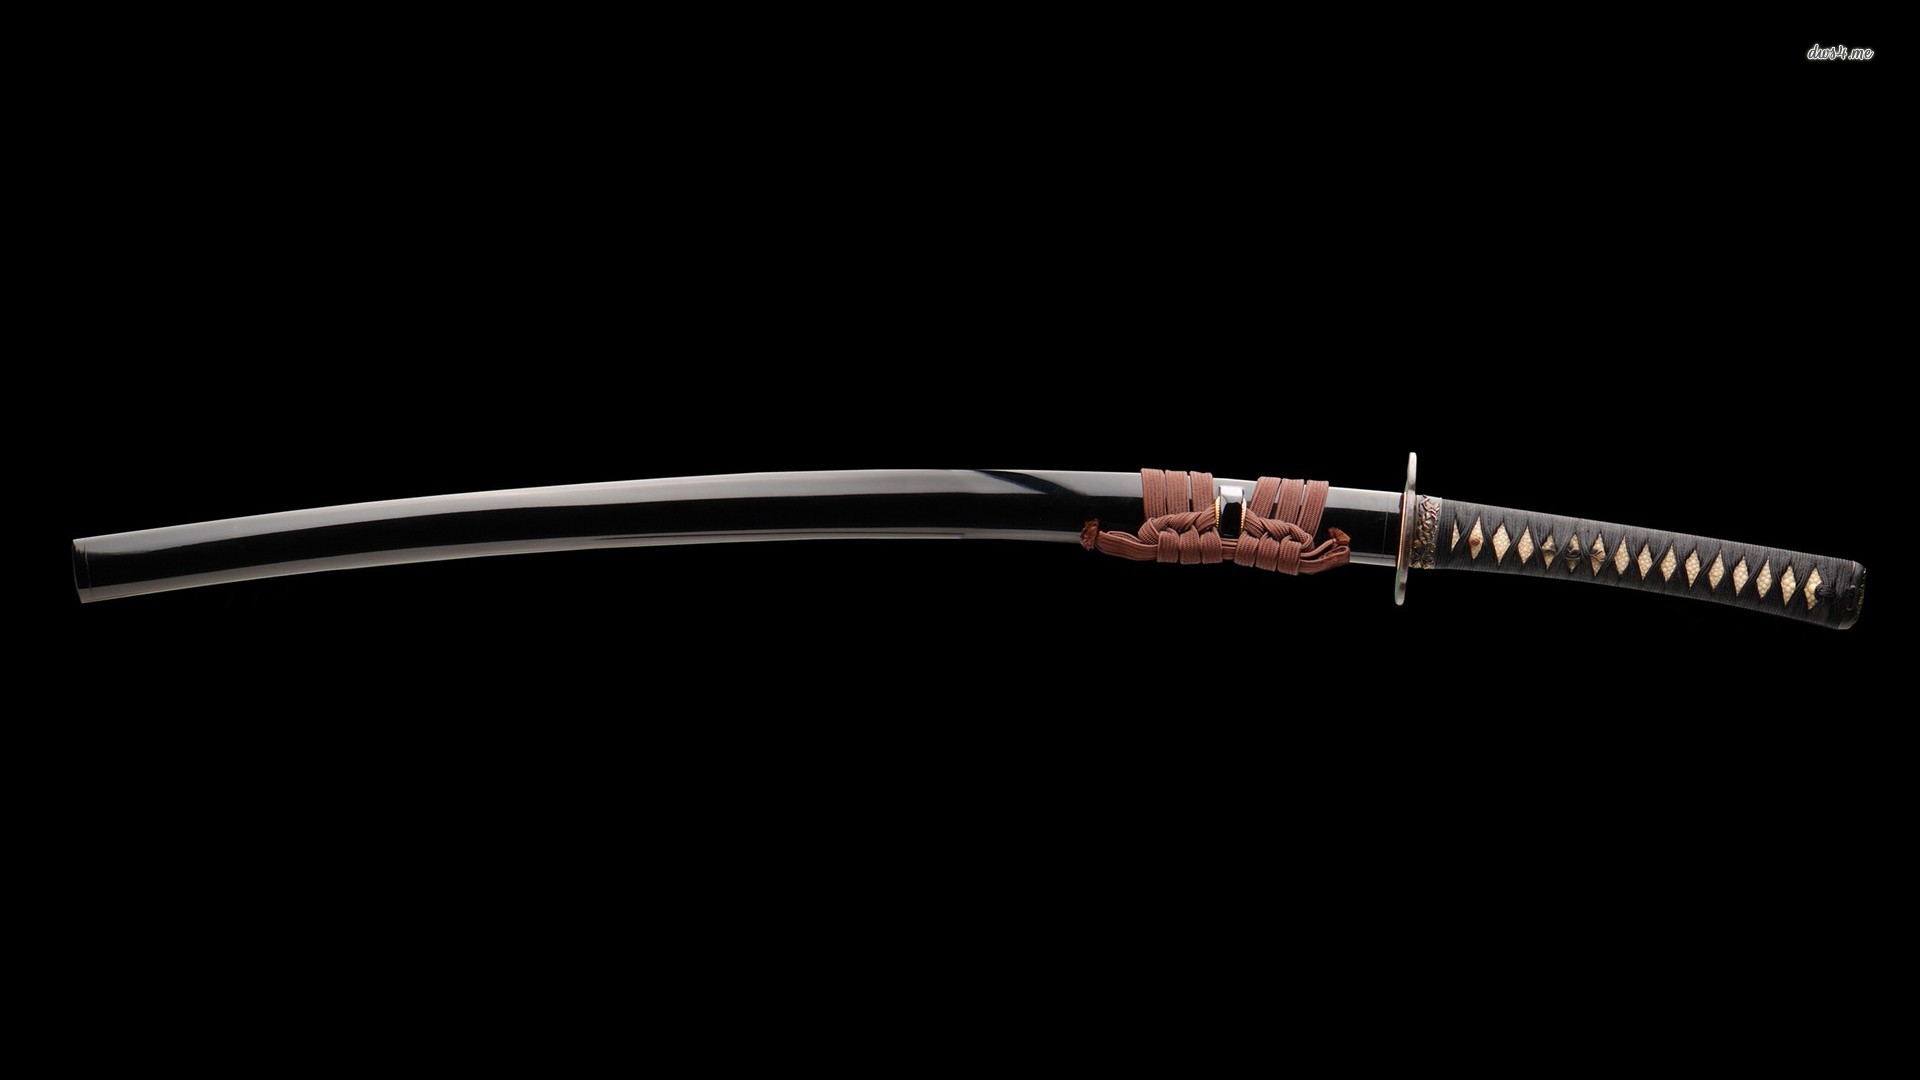 Samurai Sword Wallpaper Photography